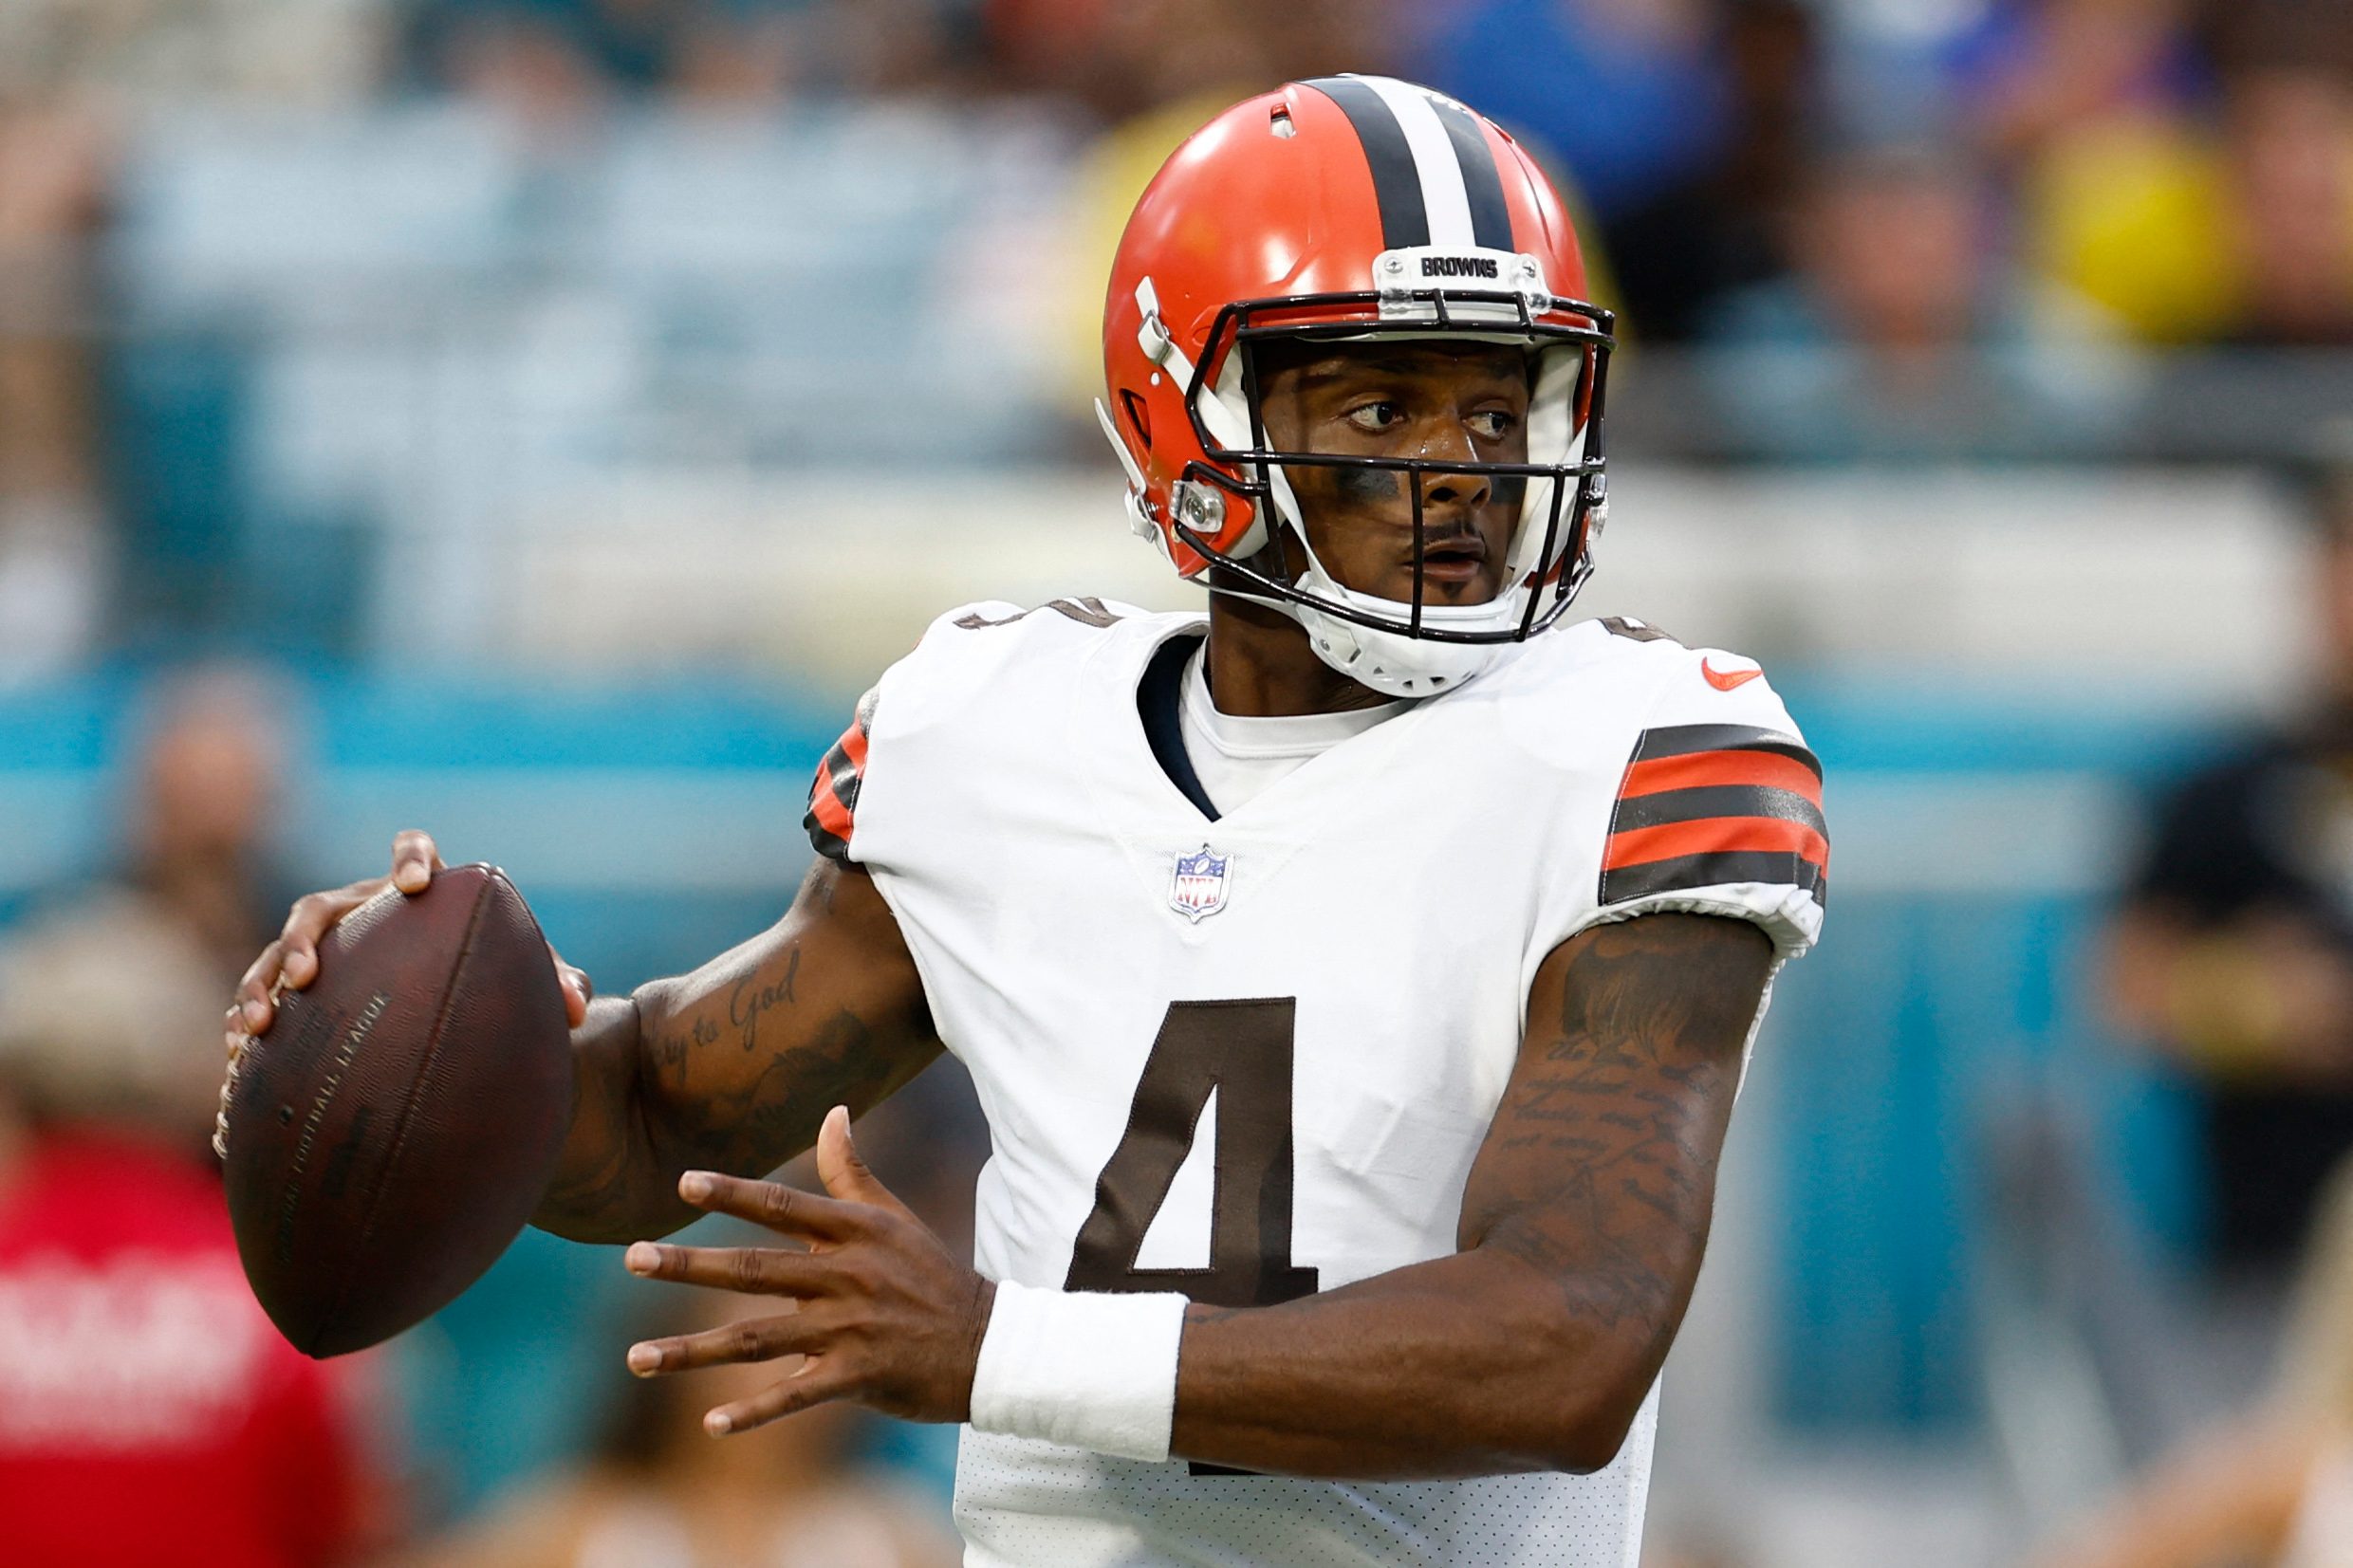 Browns quarterback Deshaun Watson suspended 11 games, fined $5 million